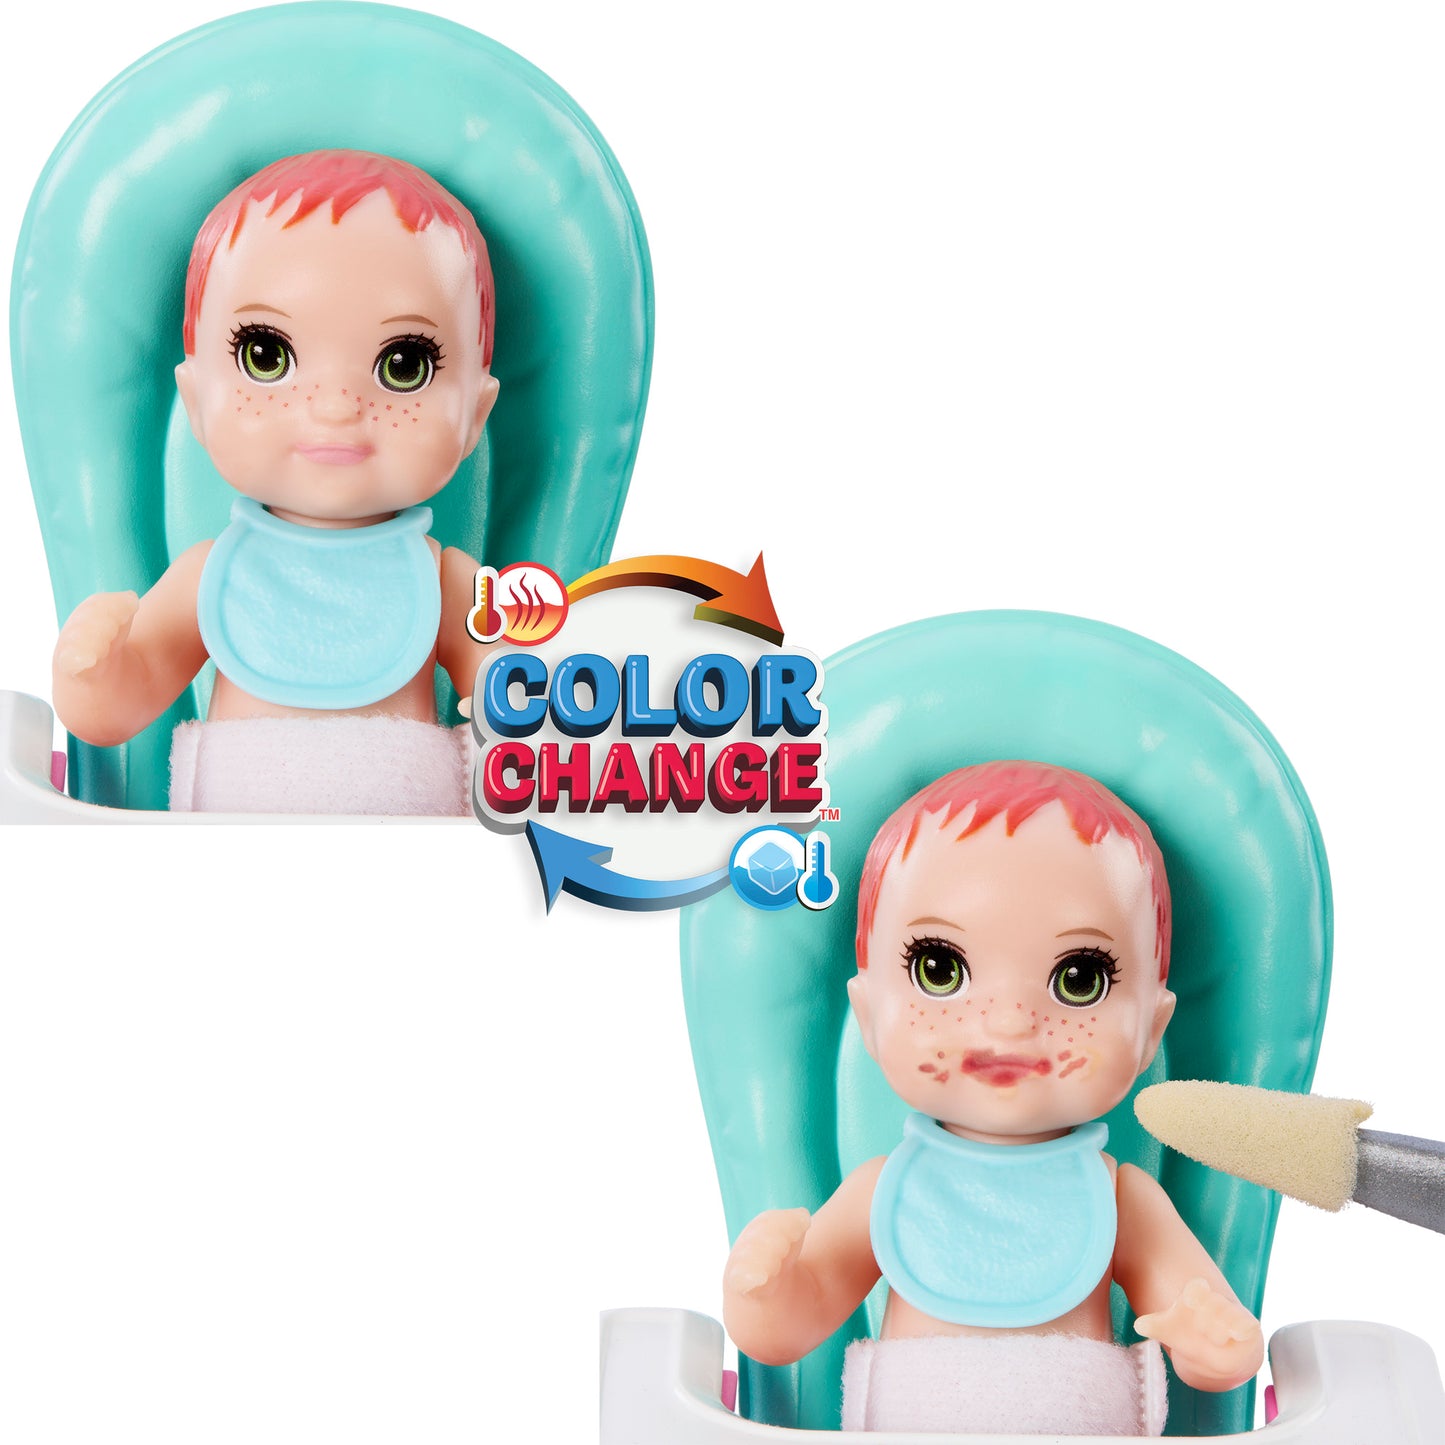 Barbie Skipper Babysitters Inc Dolls & Playset